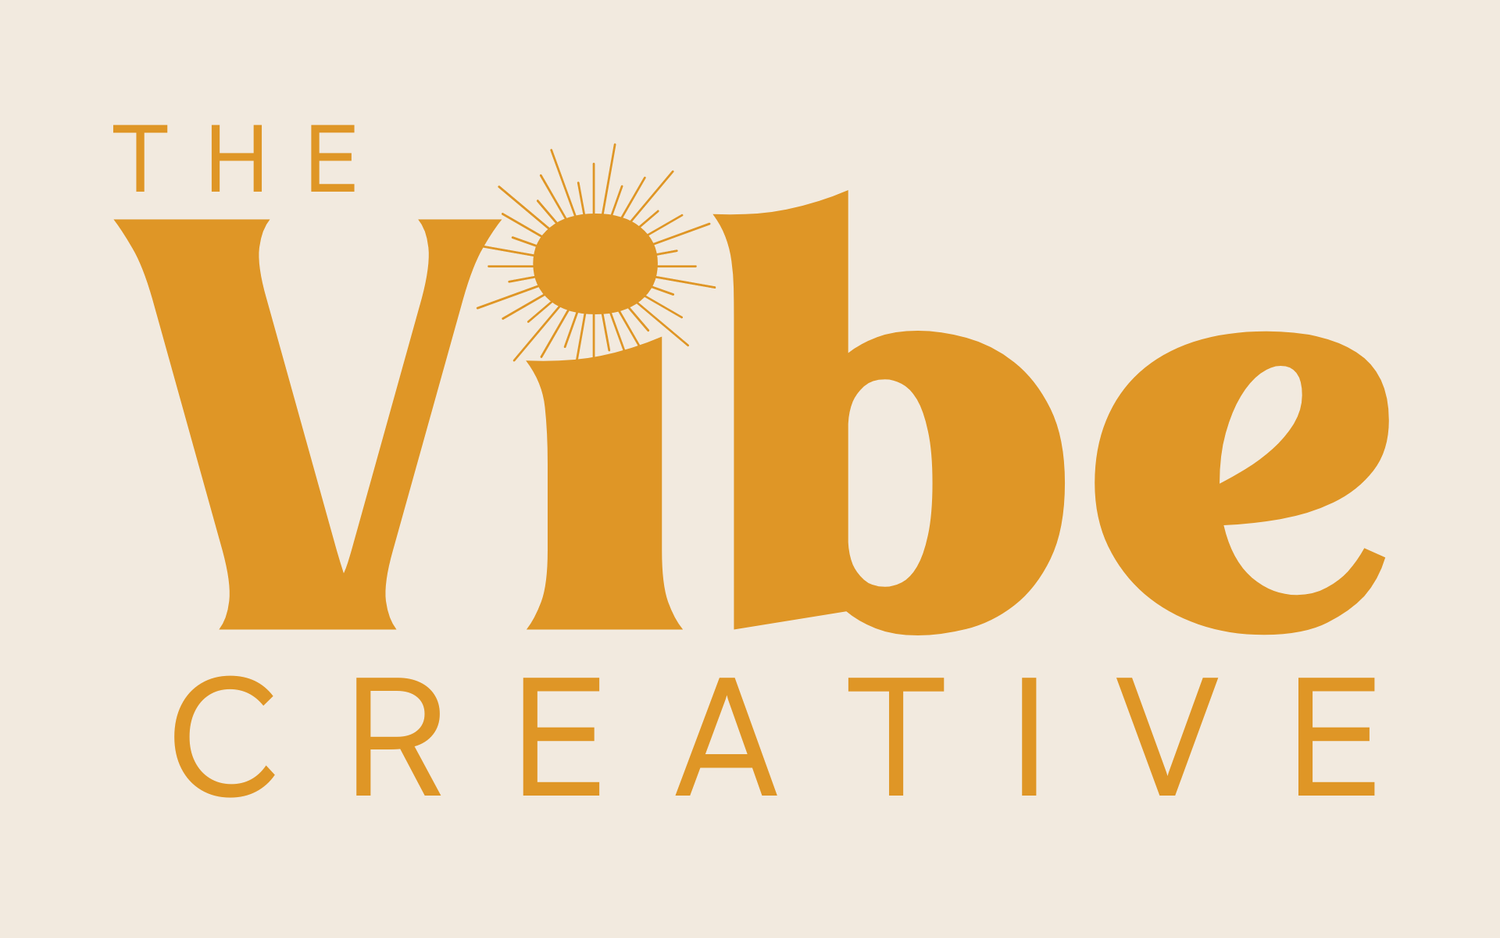 The Vibe Creative 